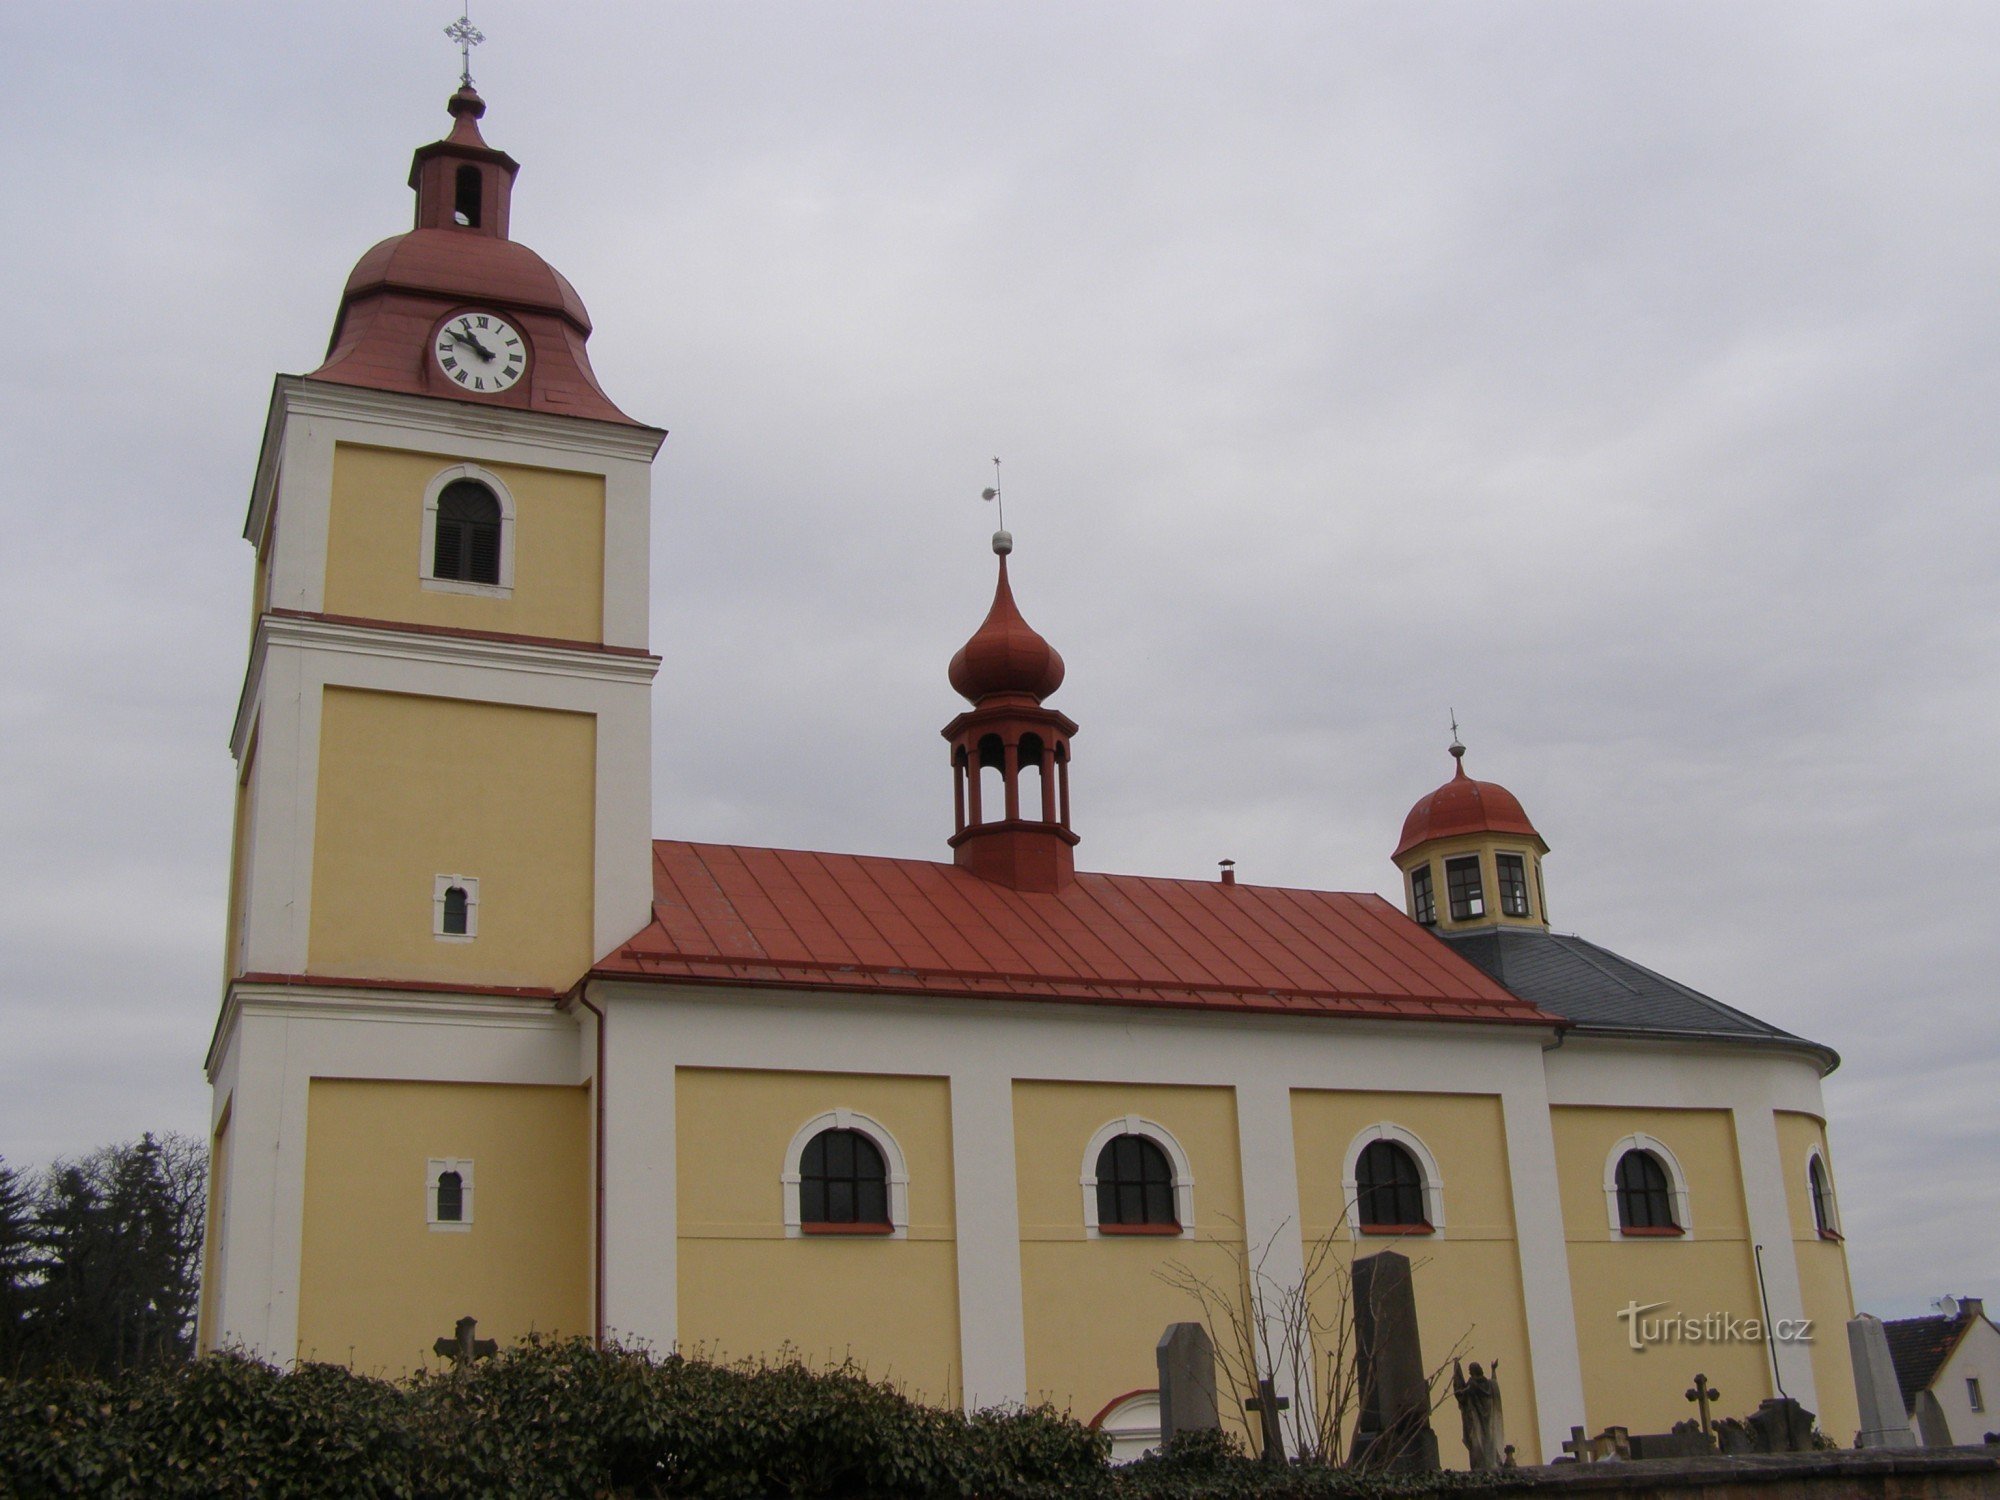 Bělohrad Spa - Biserica Tuturor Sfinților